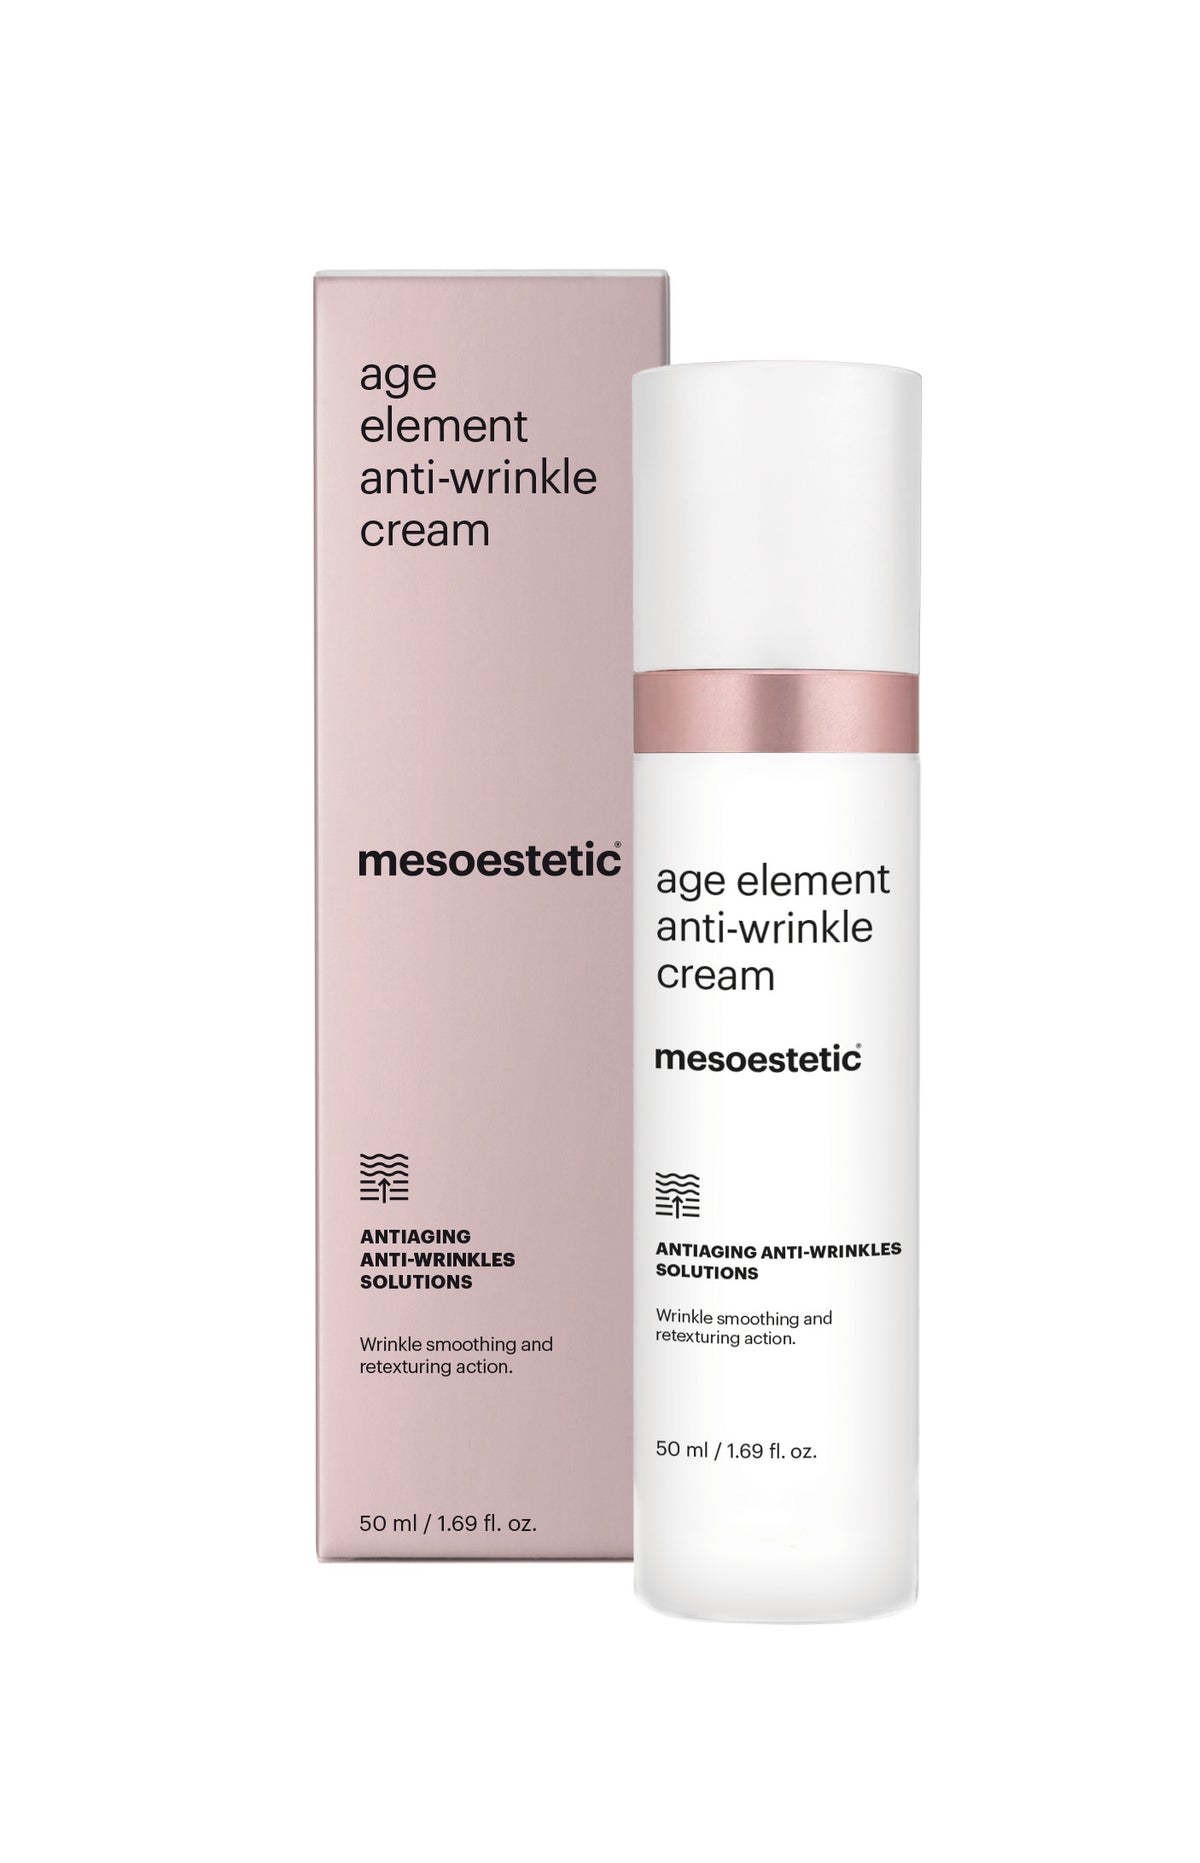 mesoestetic 4D 填充袪紋日霜 anti-wrinkle cream